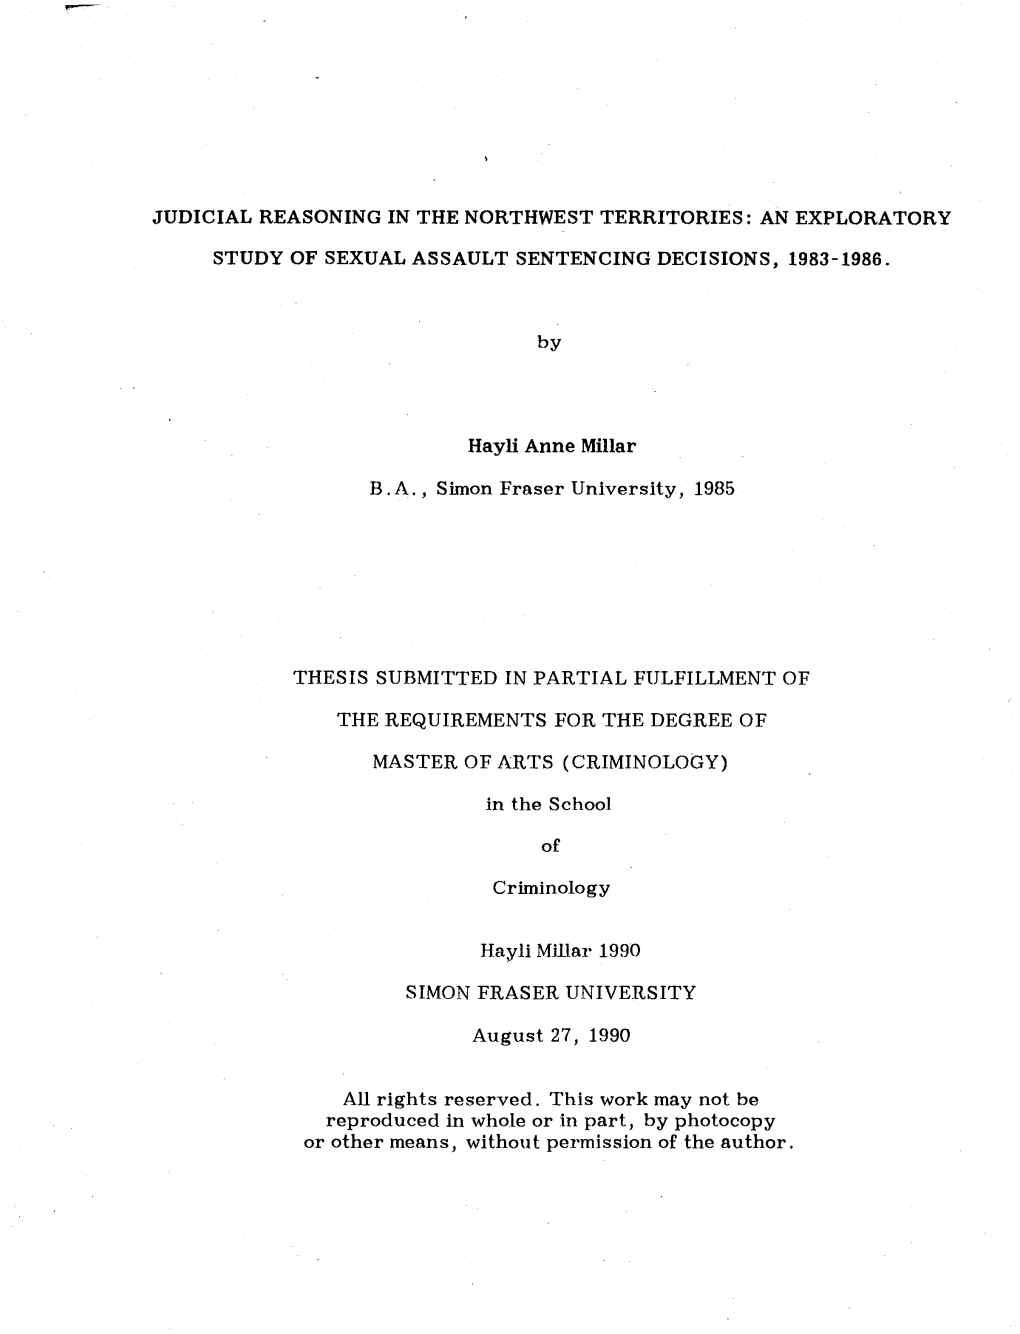 An Exploratory Study of Sexual Assault Sentencing Decisions, 1983-1986